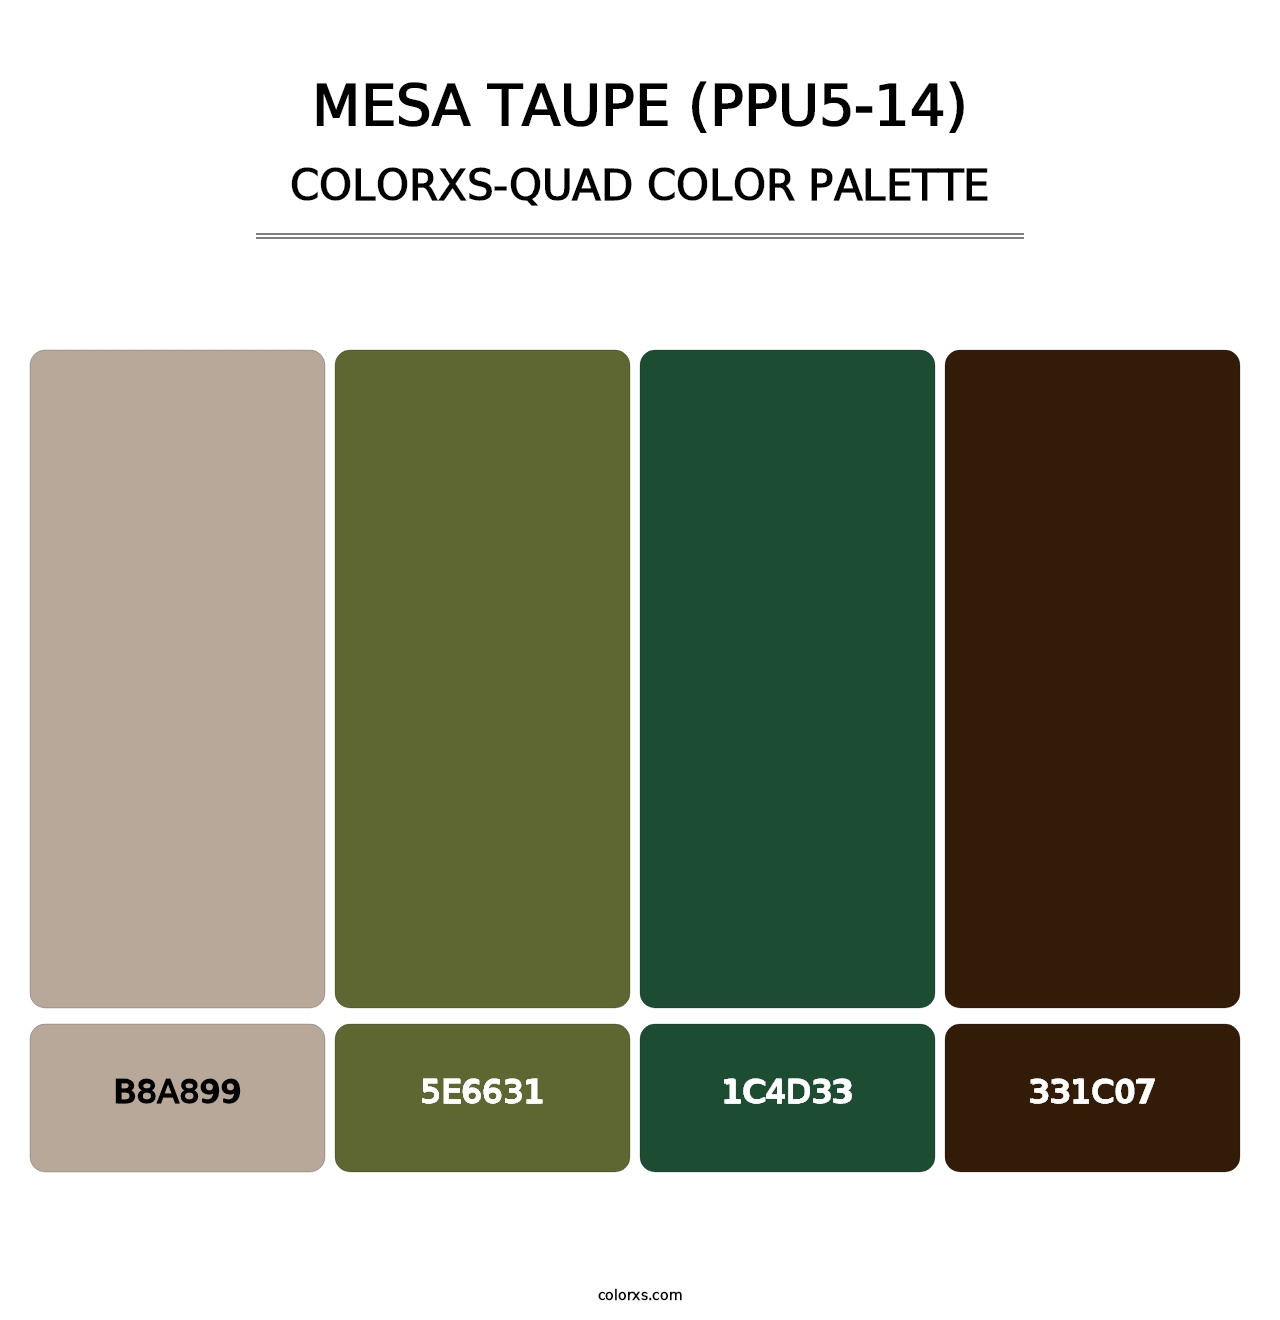 Mesa Taupe (PPU5-14) - Colorxs Quad Palette